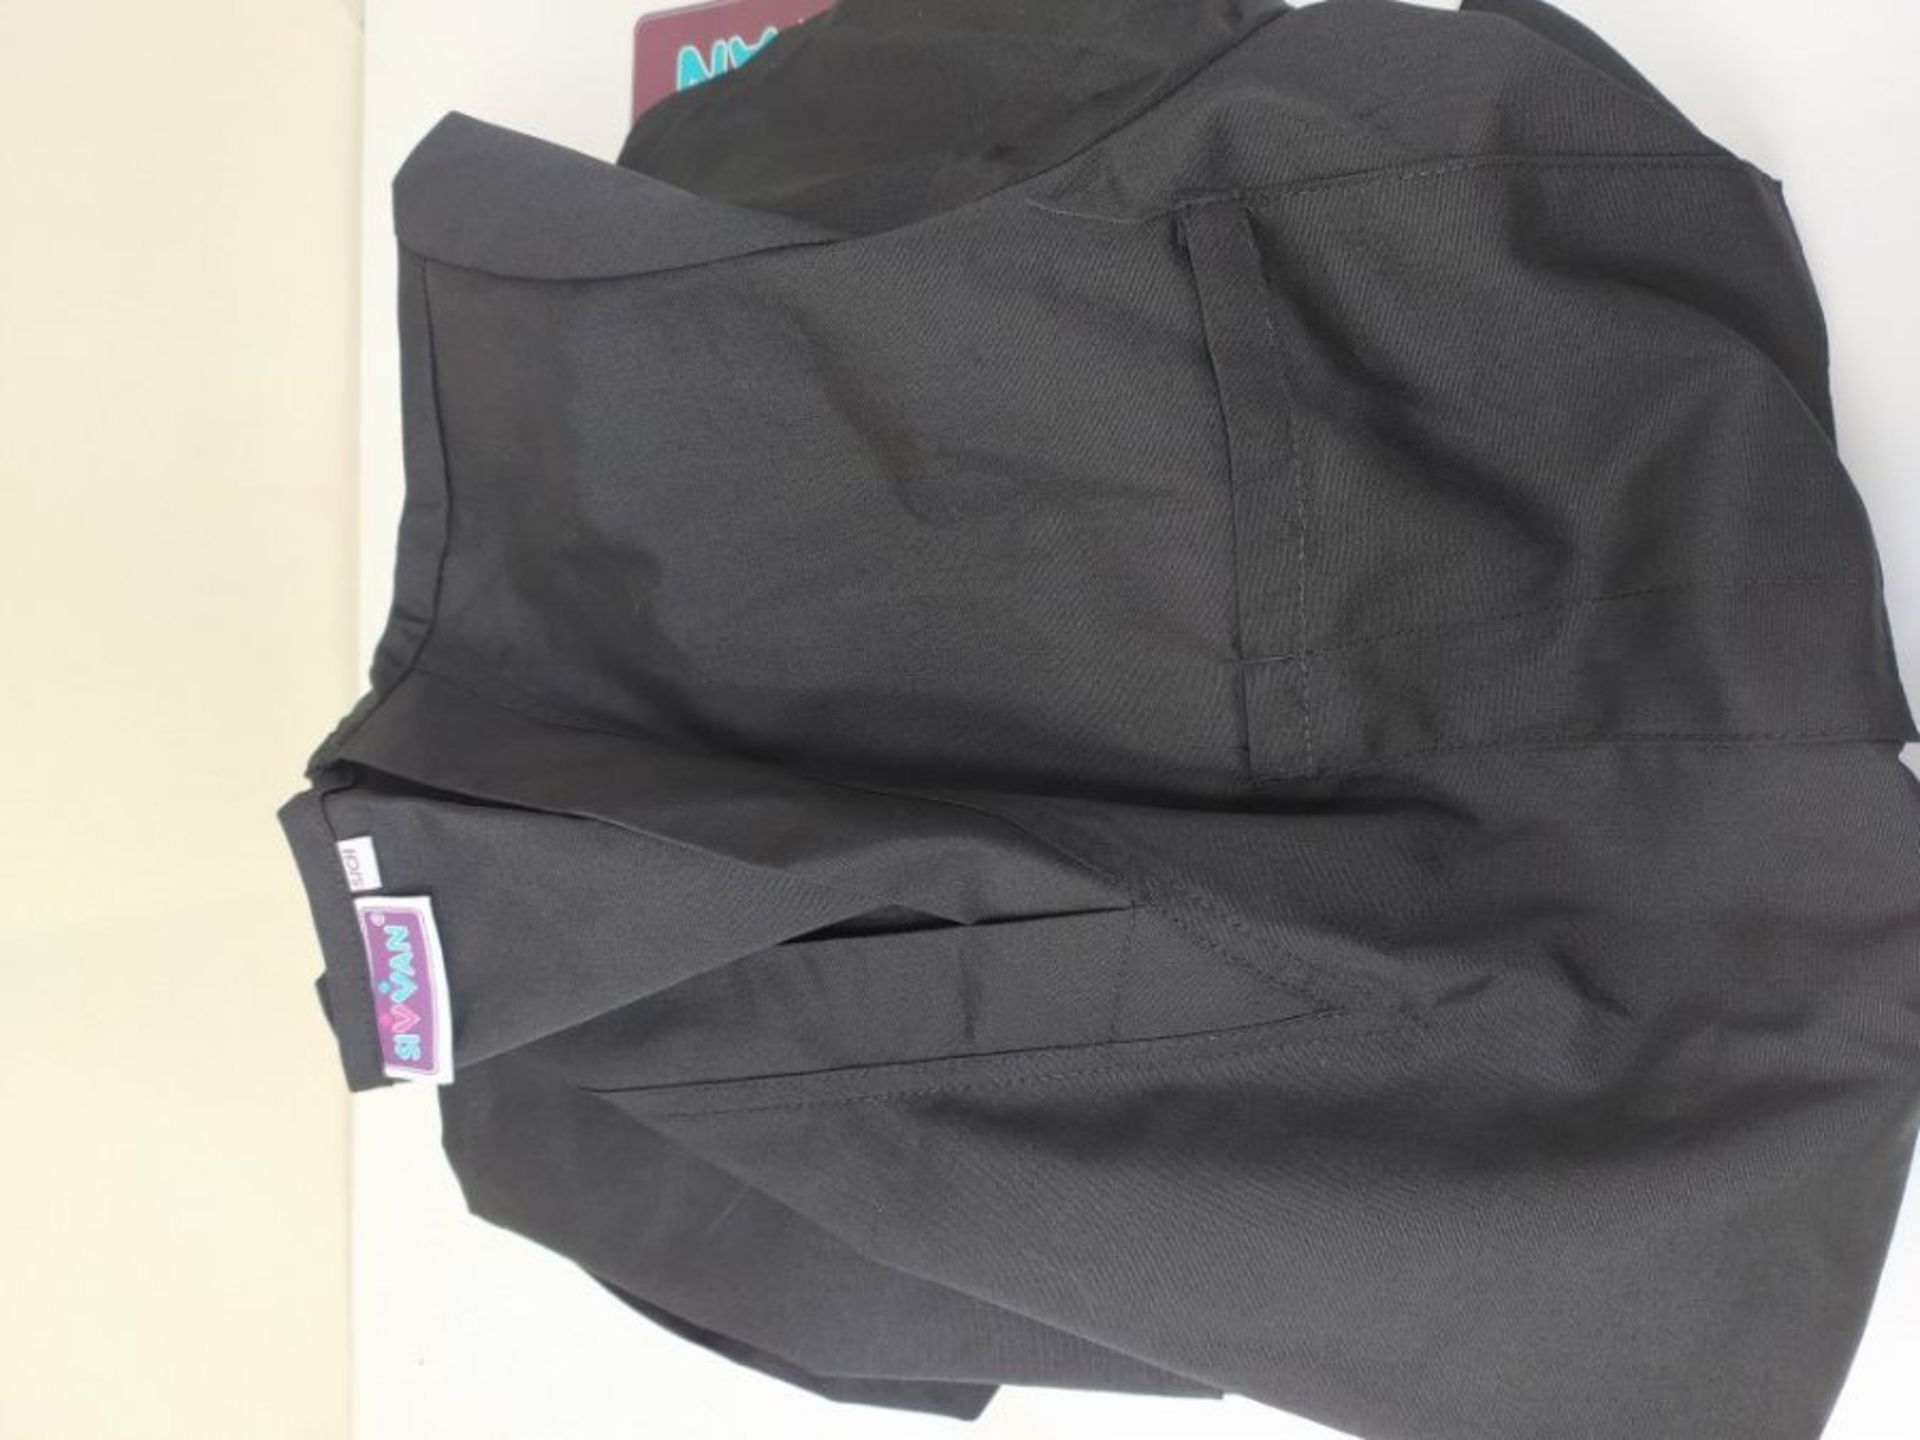 Sivvan Unisex Classic Scrub Set V-Neck Top/Drawstring Trousers - S8400 - Black - S - Image 2 of 2